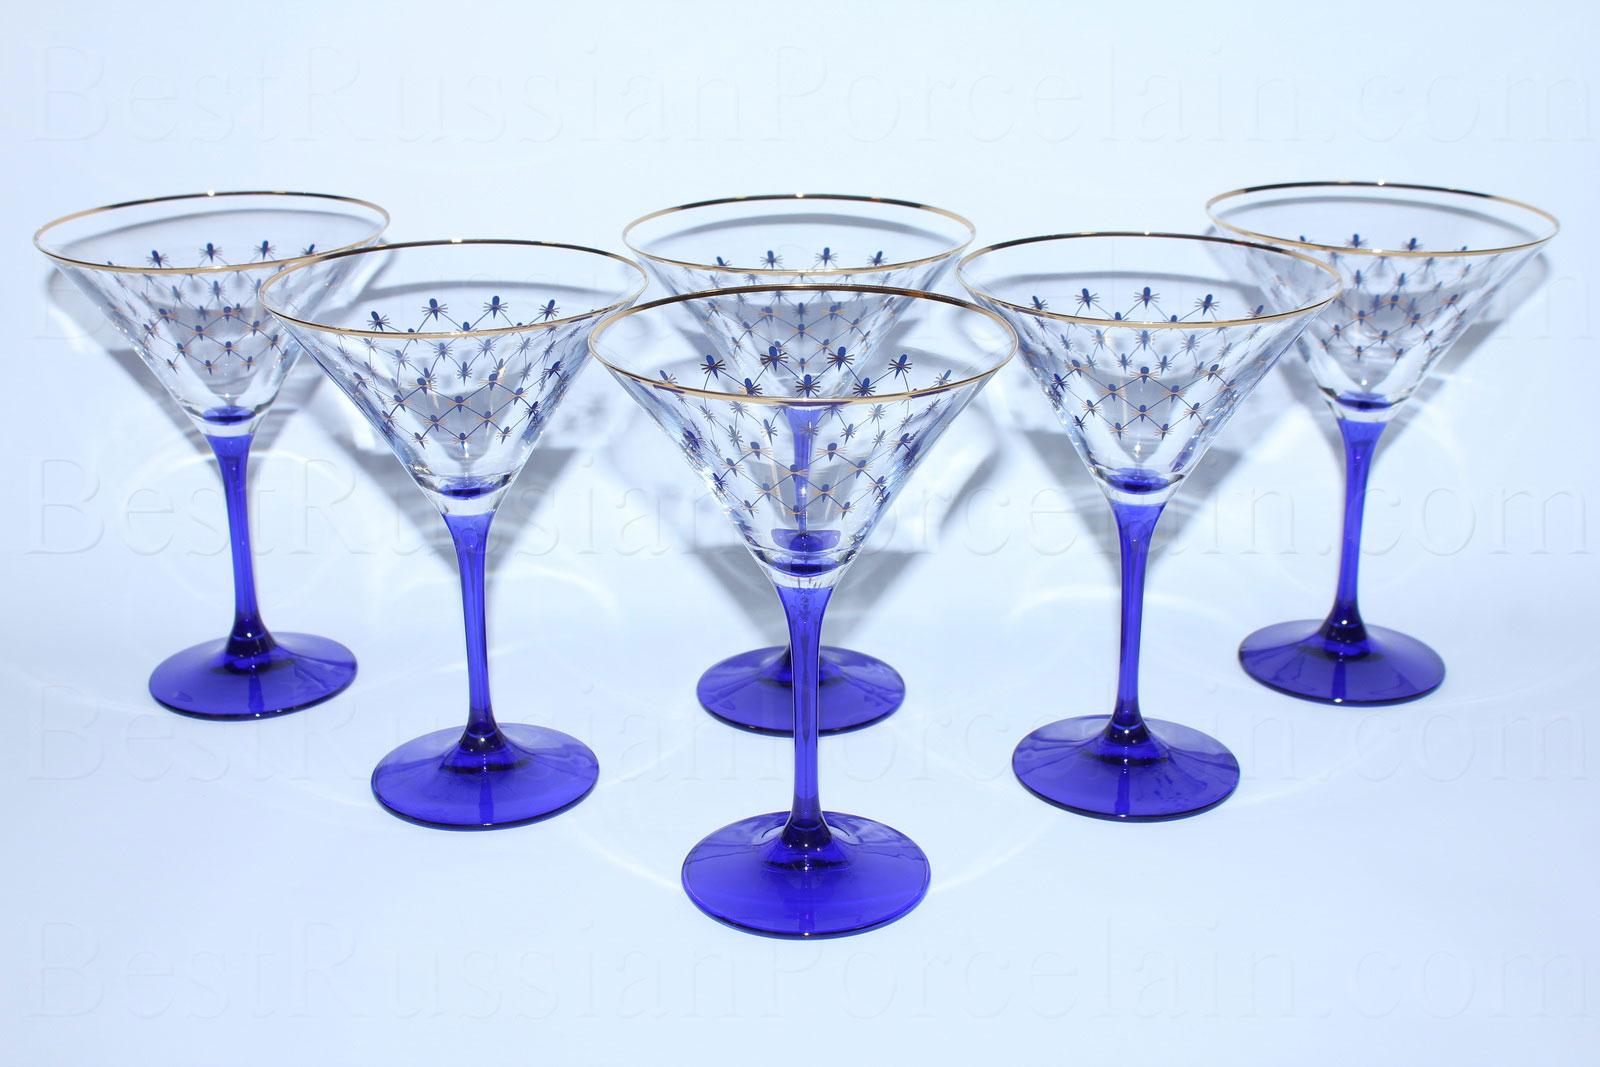 https://bestrussianporcelain.com/image/data/Tovar/Glassware/martini/Martini1&01.jpg